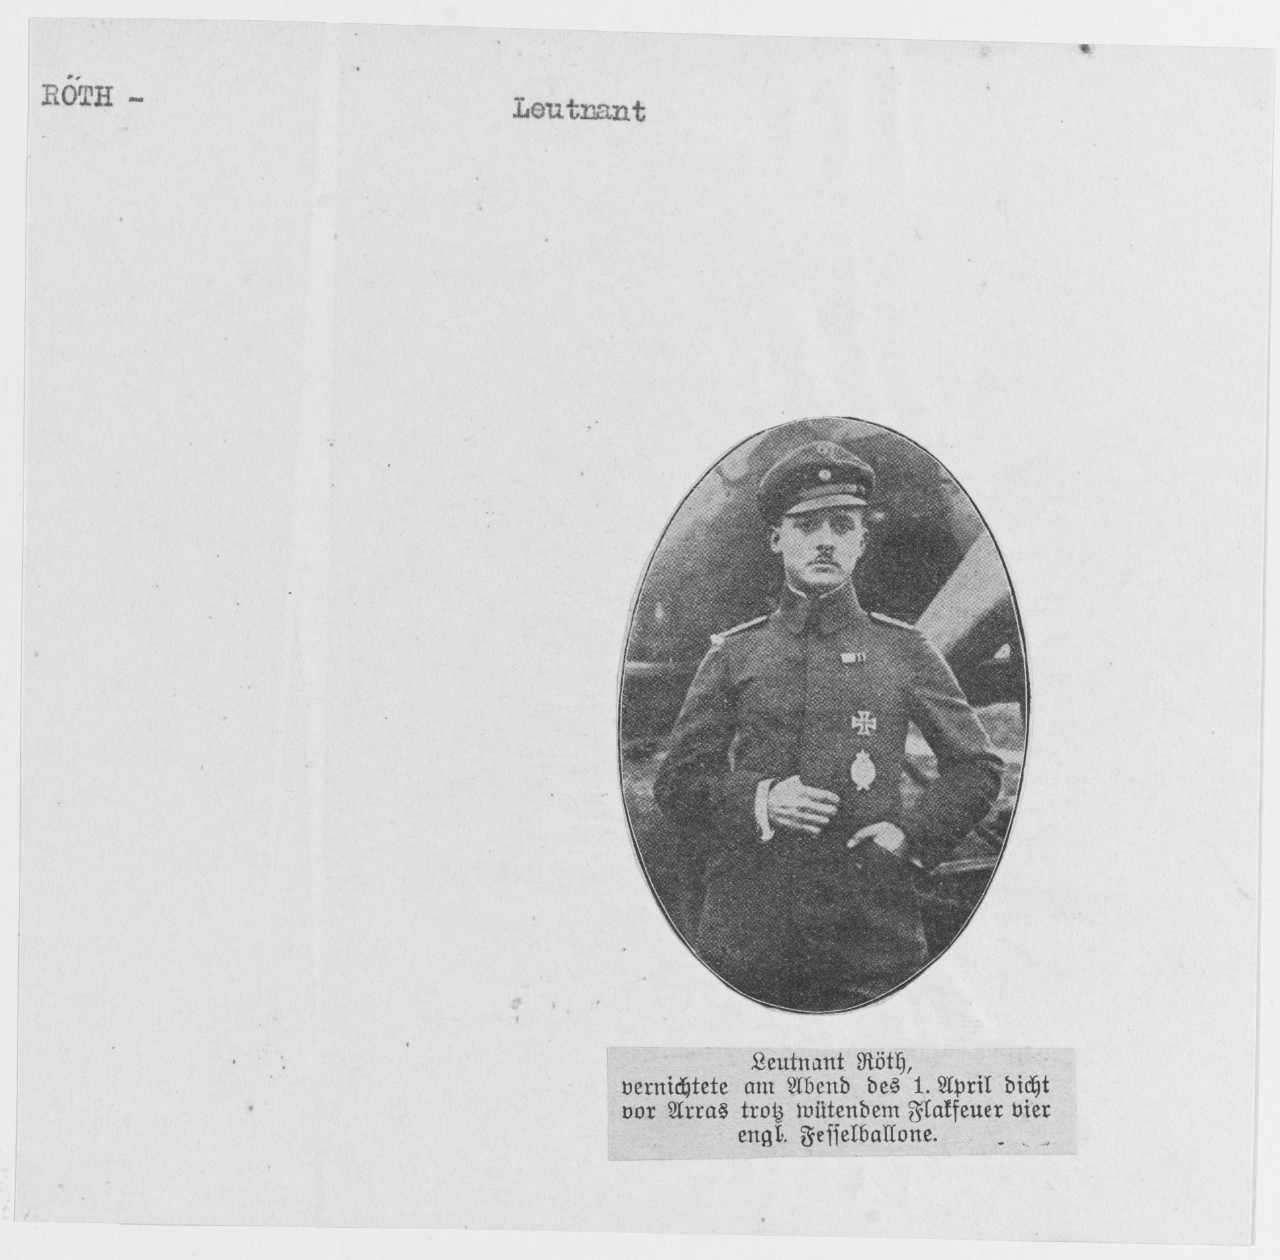 Leutnant Roth. German Submarine Commander